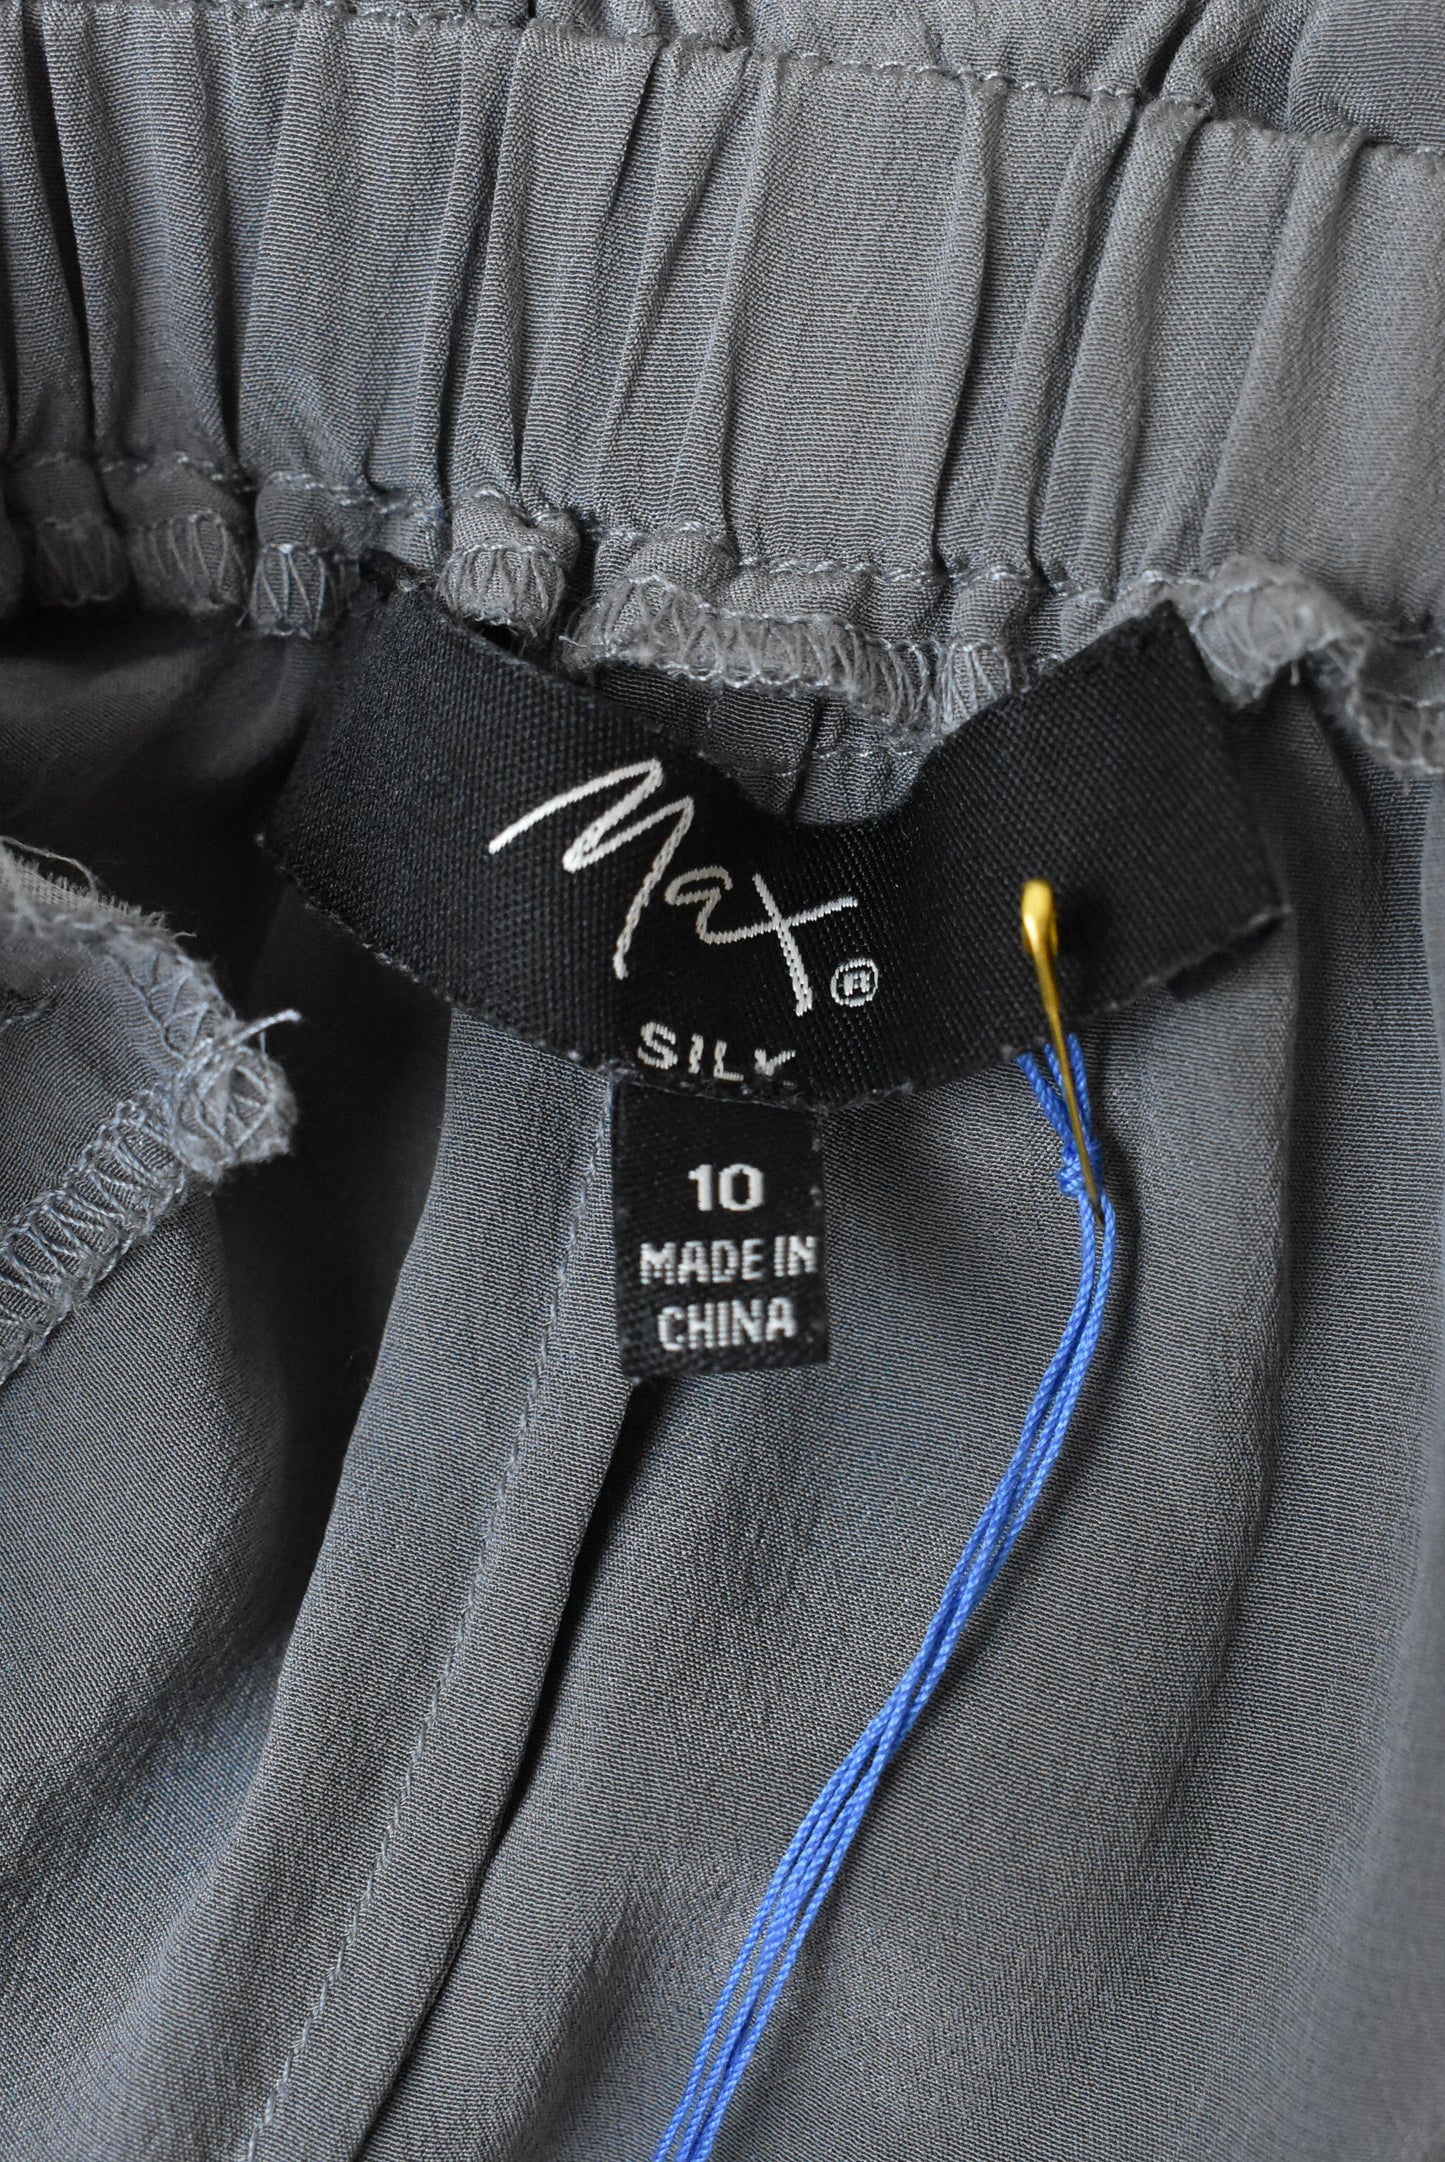 Max grey 100% silk pants, size 10